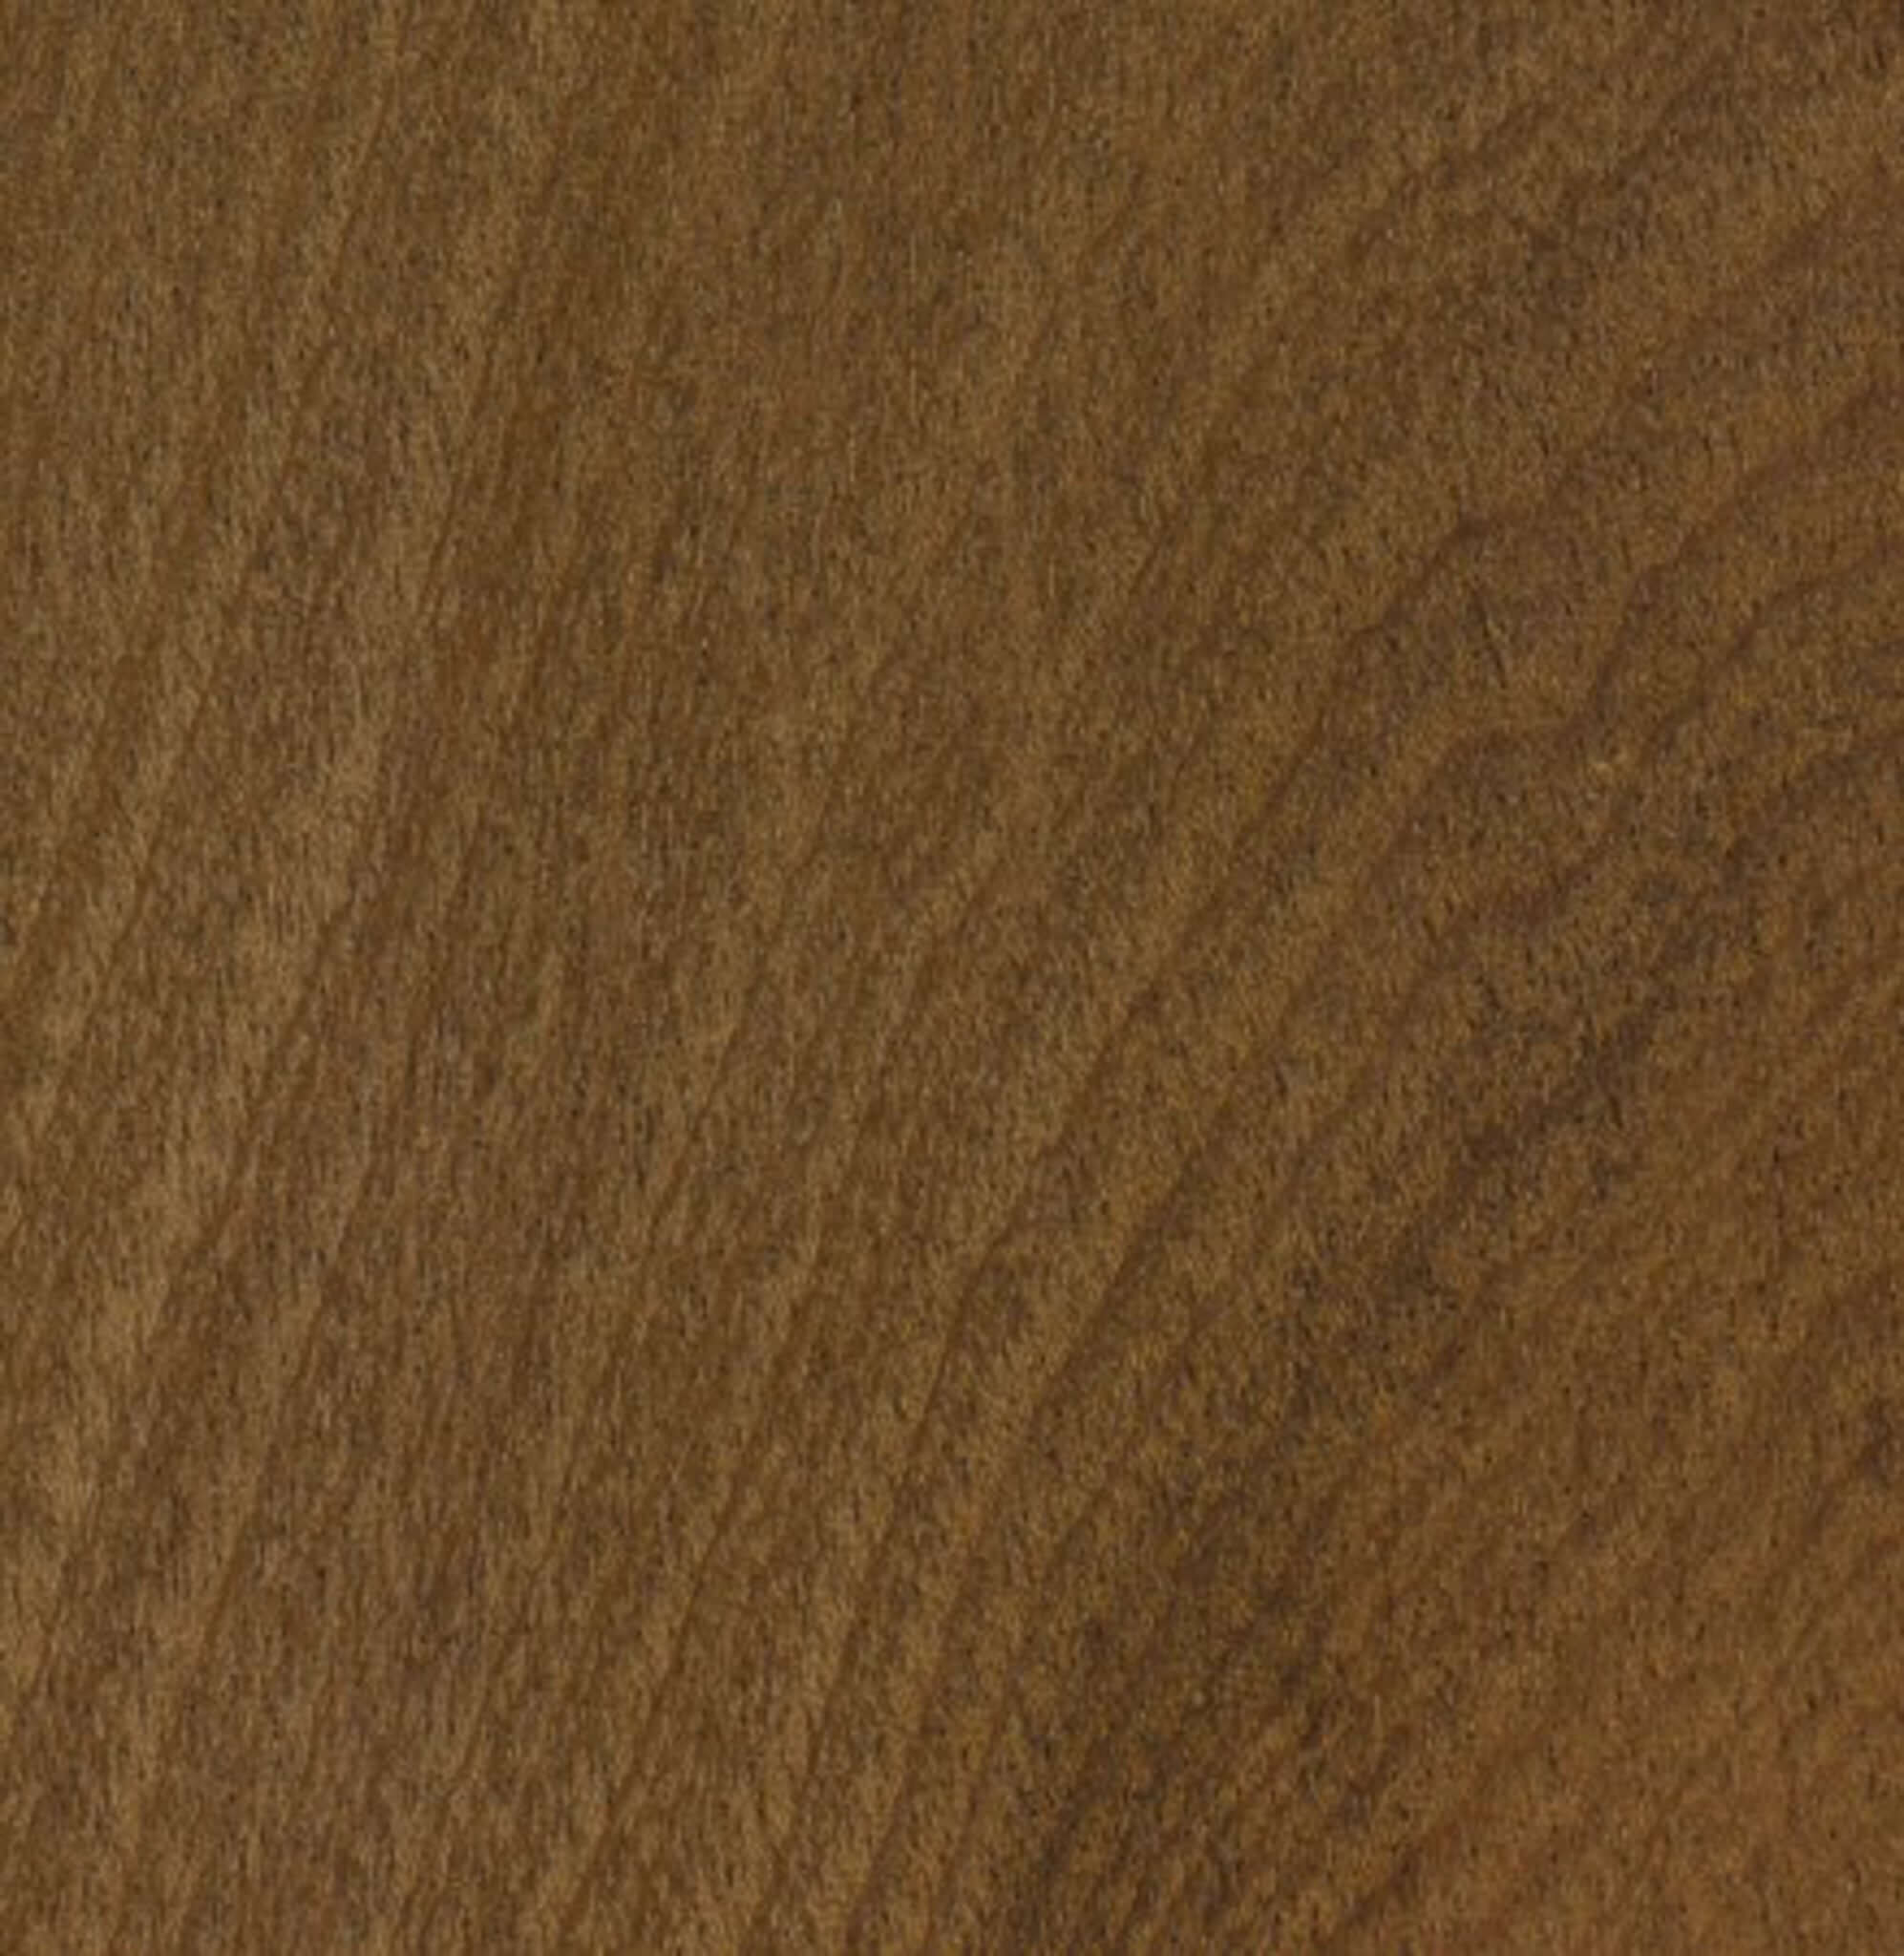 a sample of sapele wood